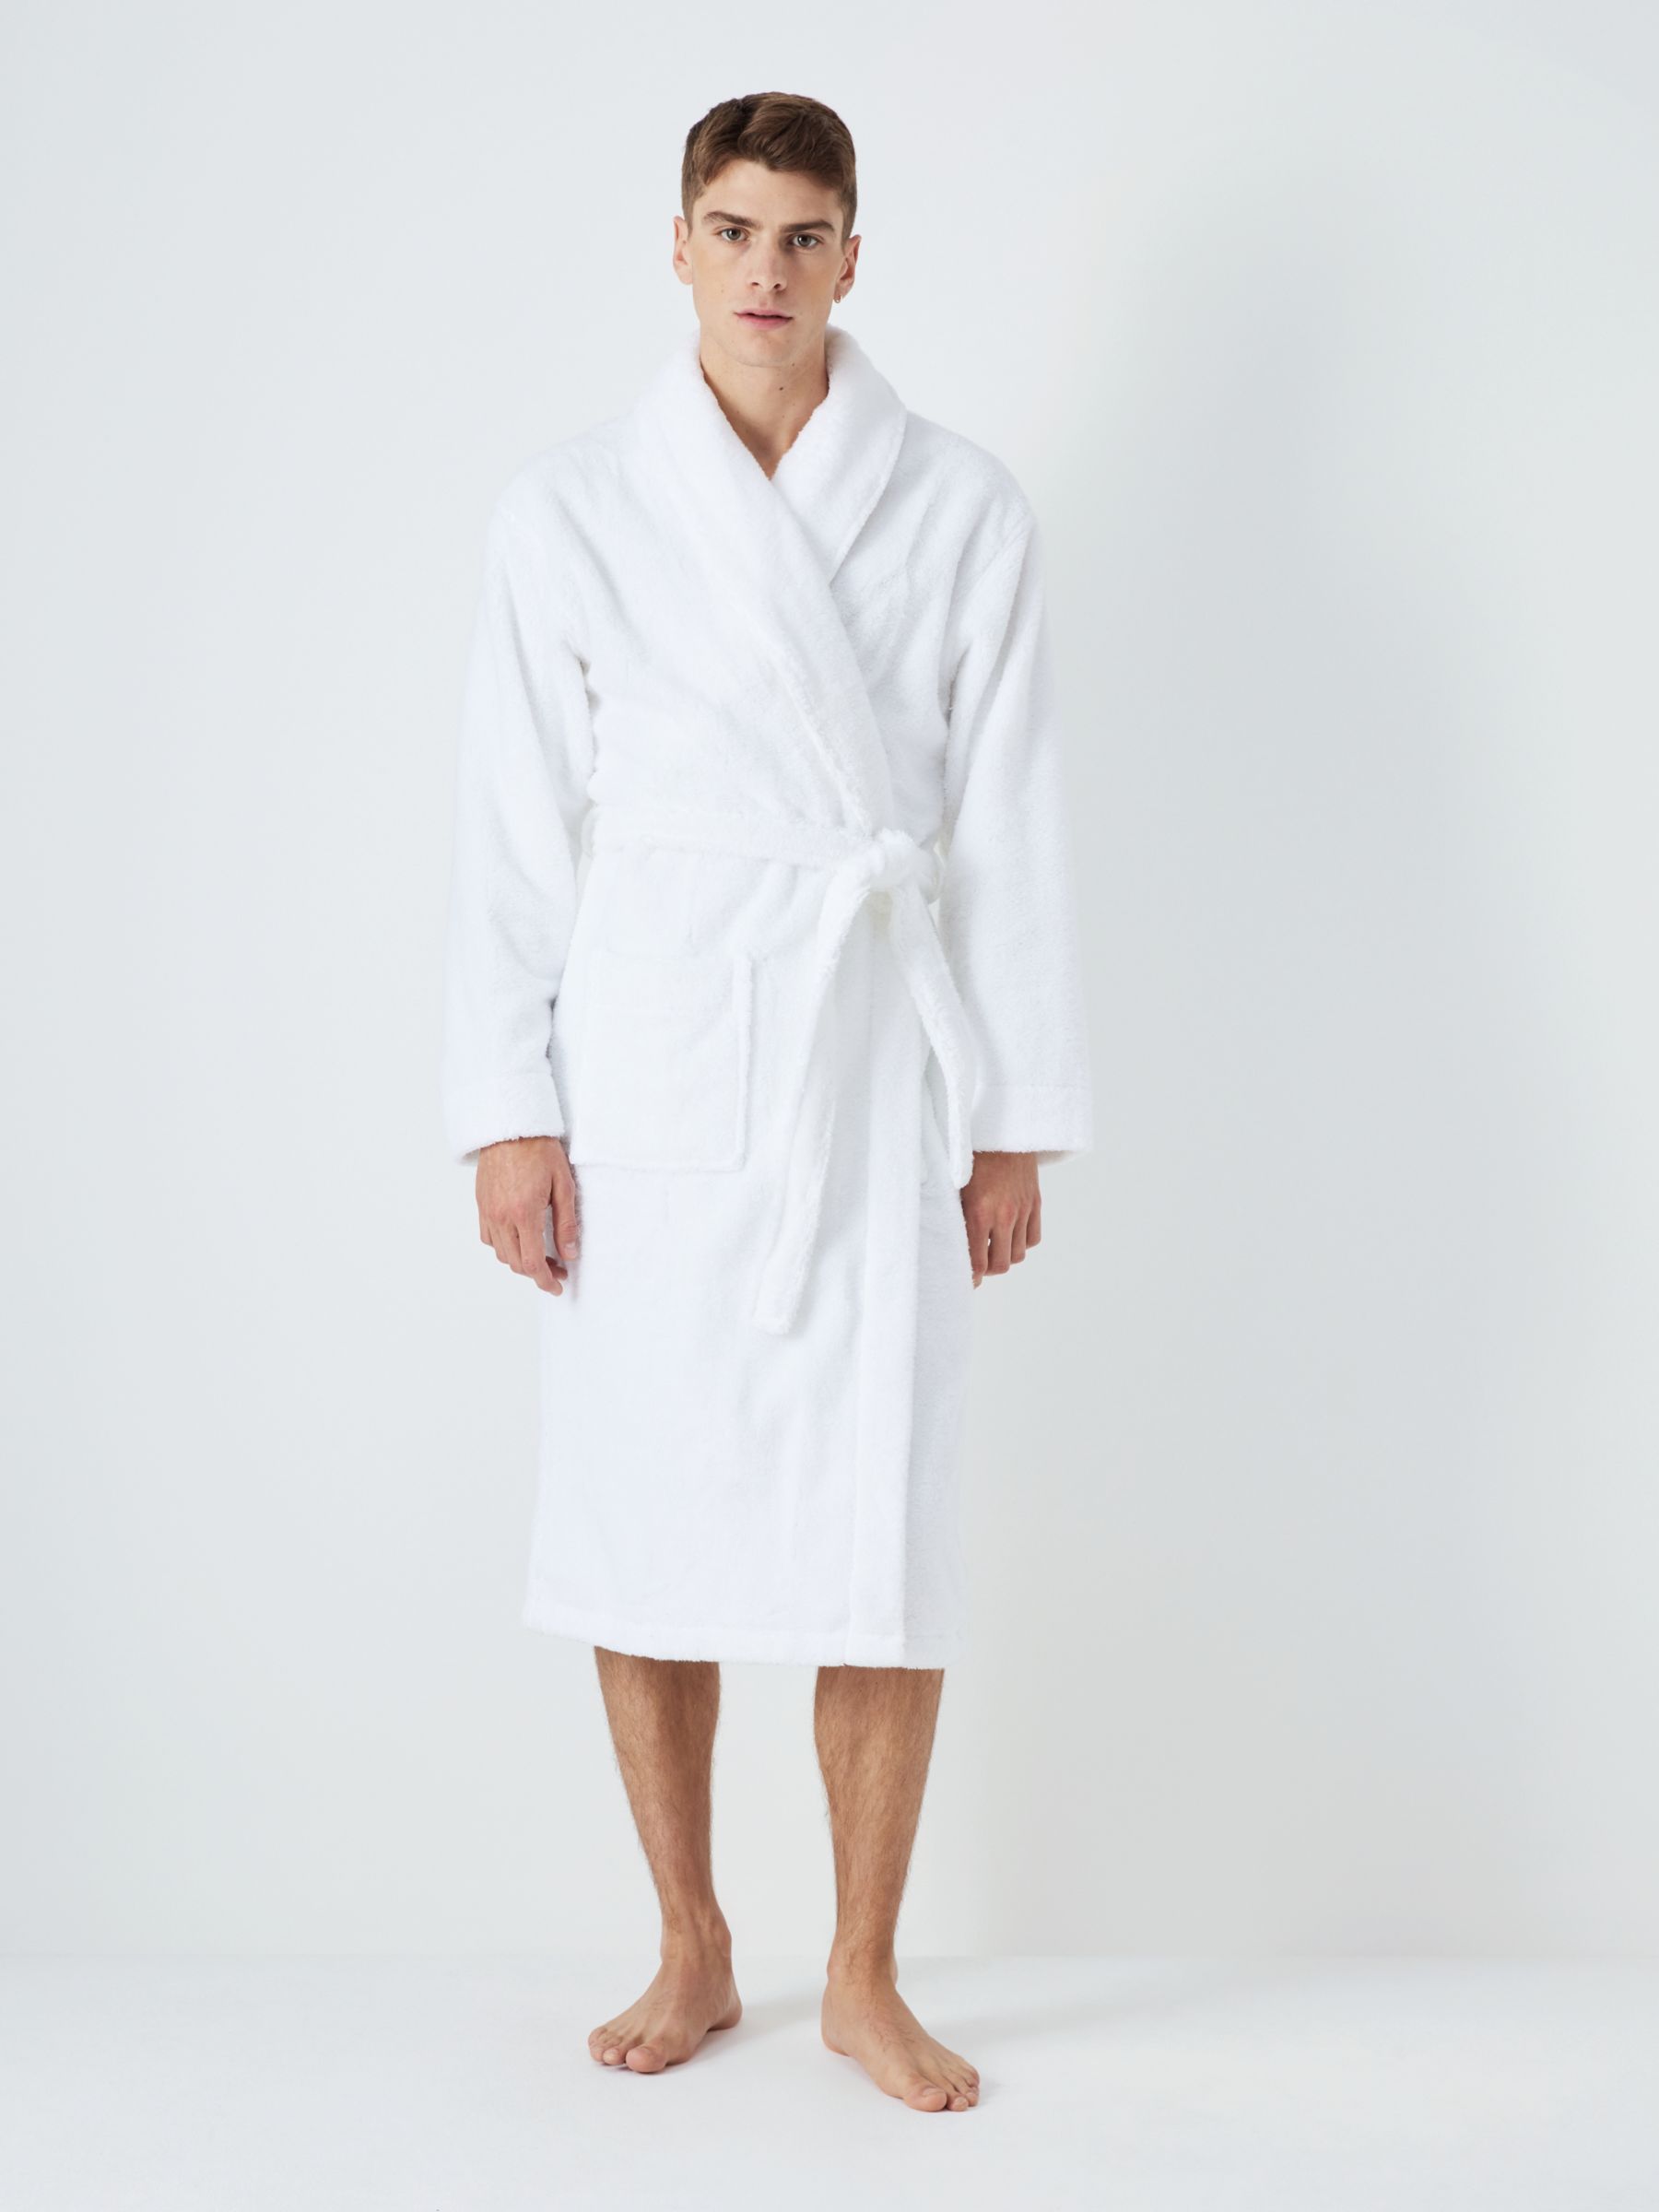 John Lewis Premium Luxury Towelling Robe, White, L